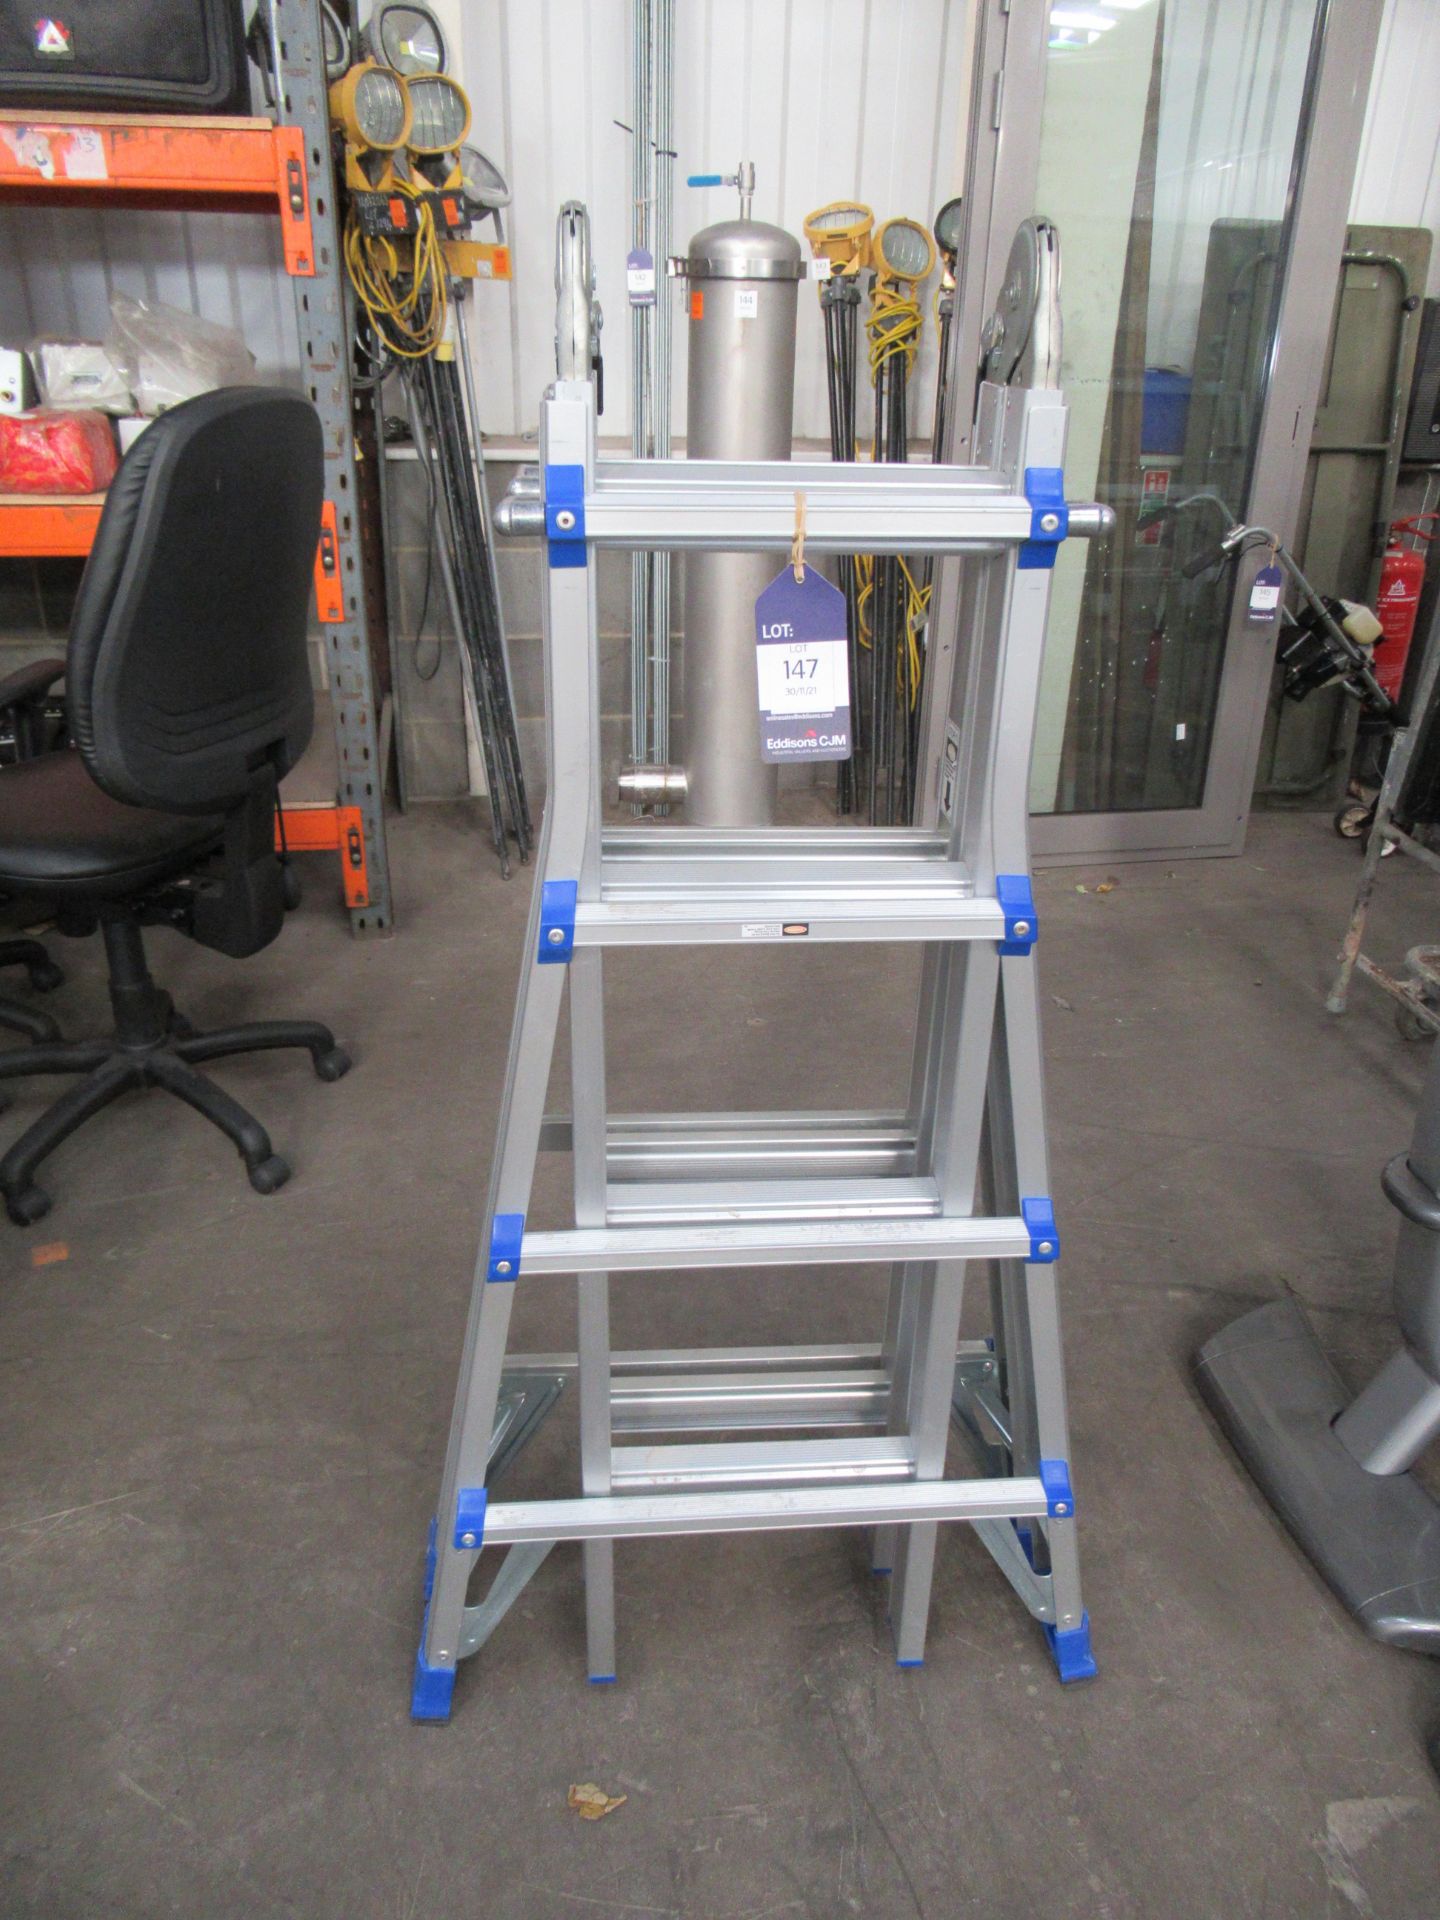 A Multi-Use Ladder